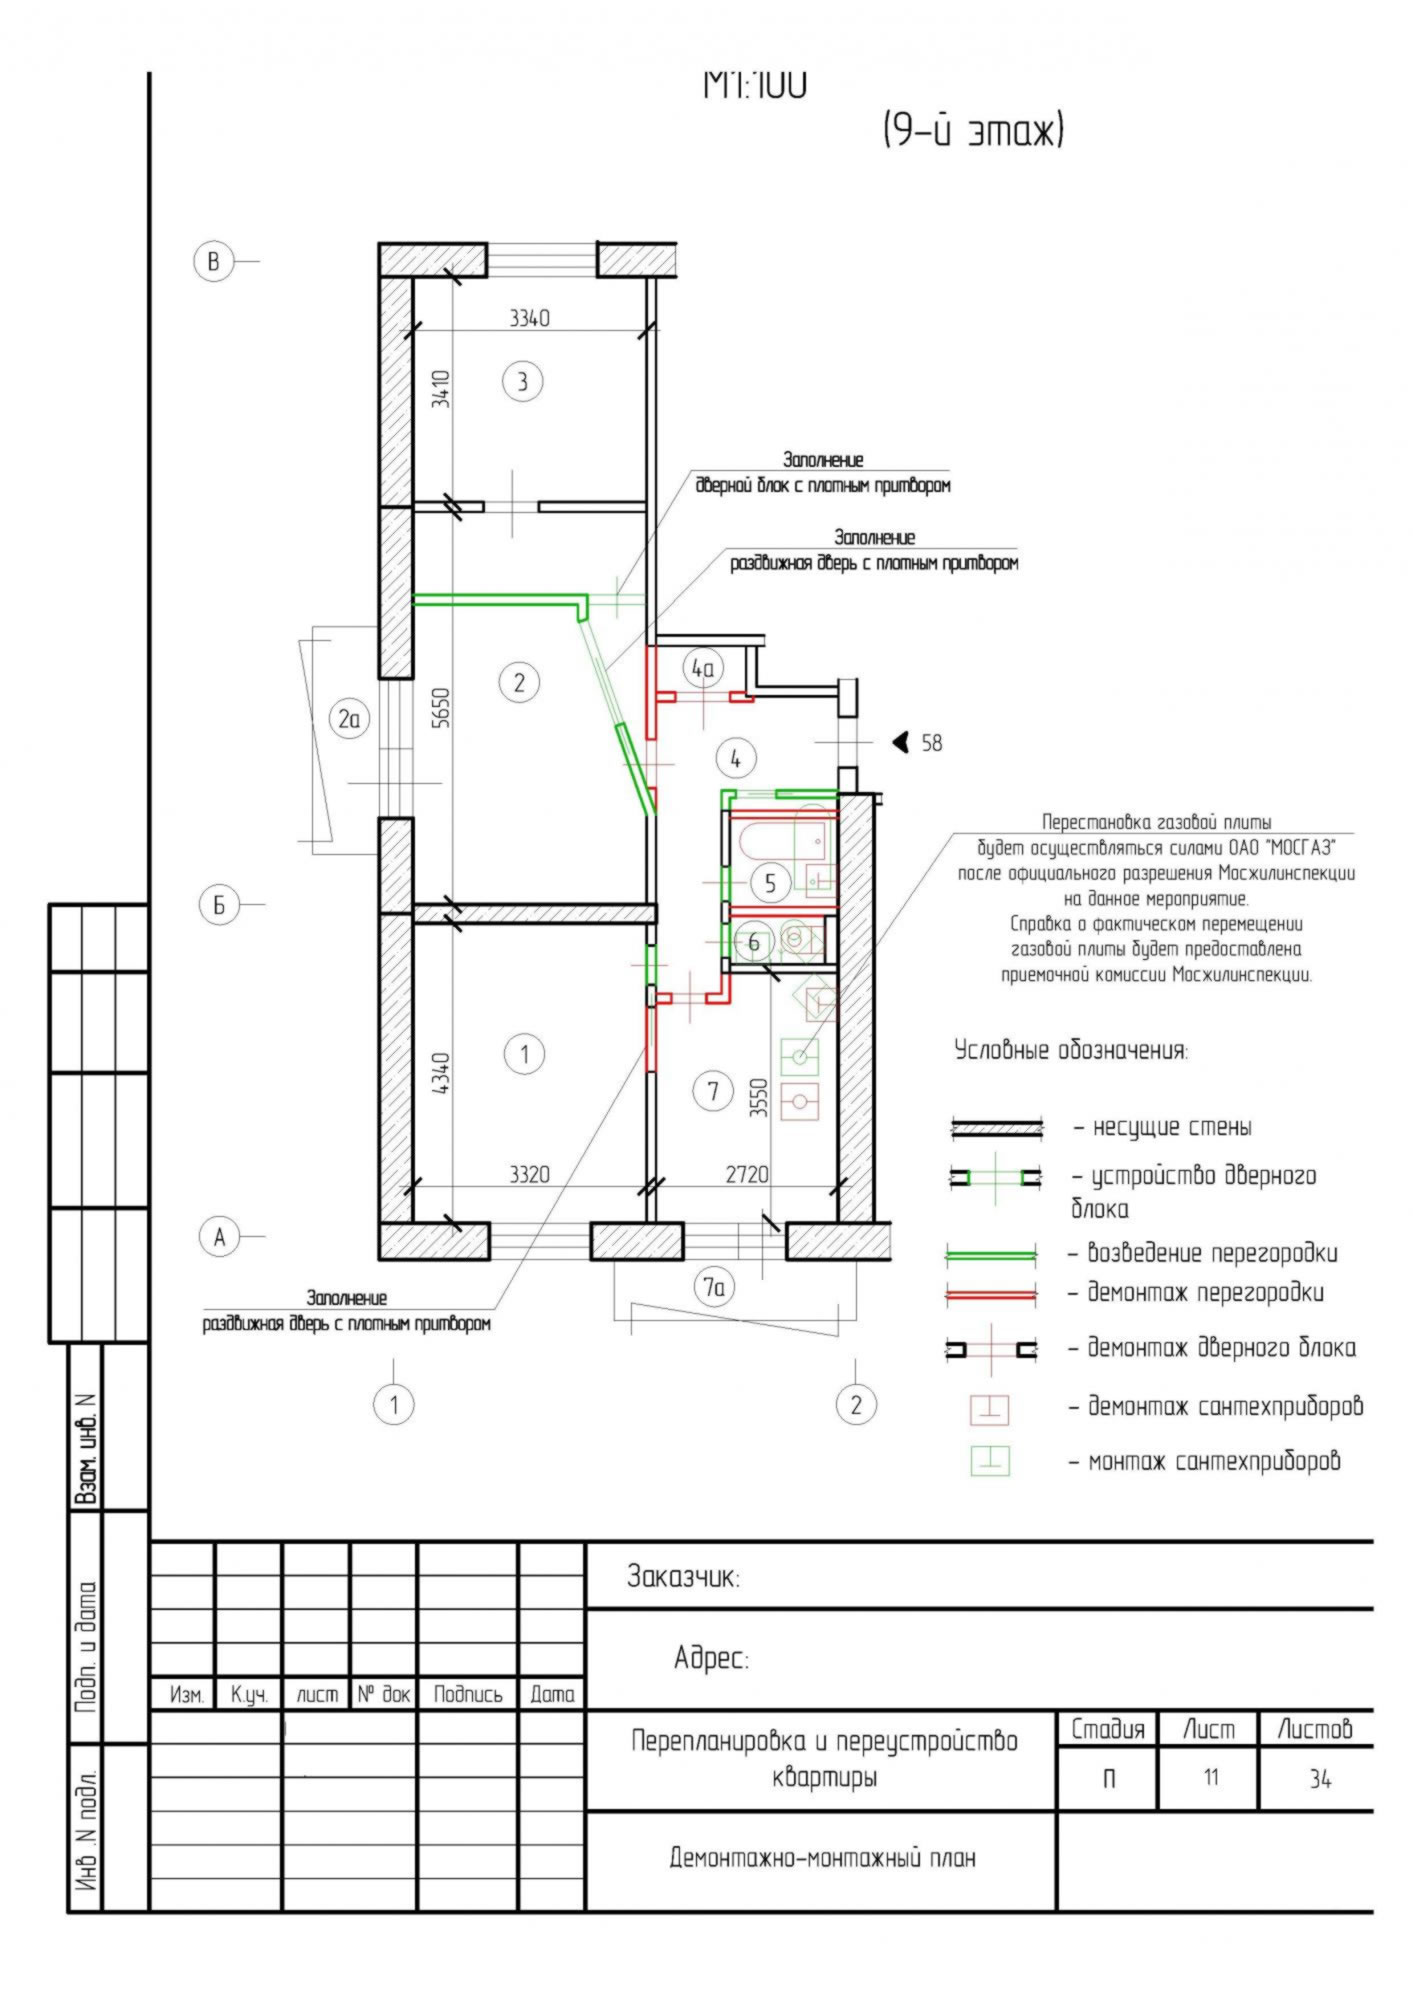 Демонтажно-монтажный план трехкомнатной квартиры серии II-18